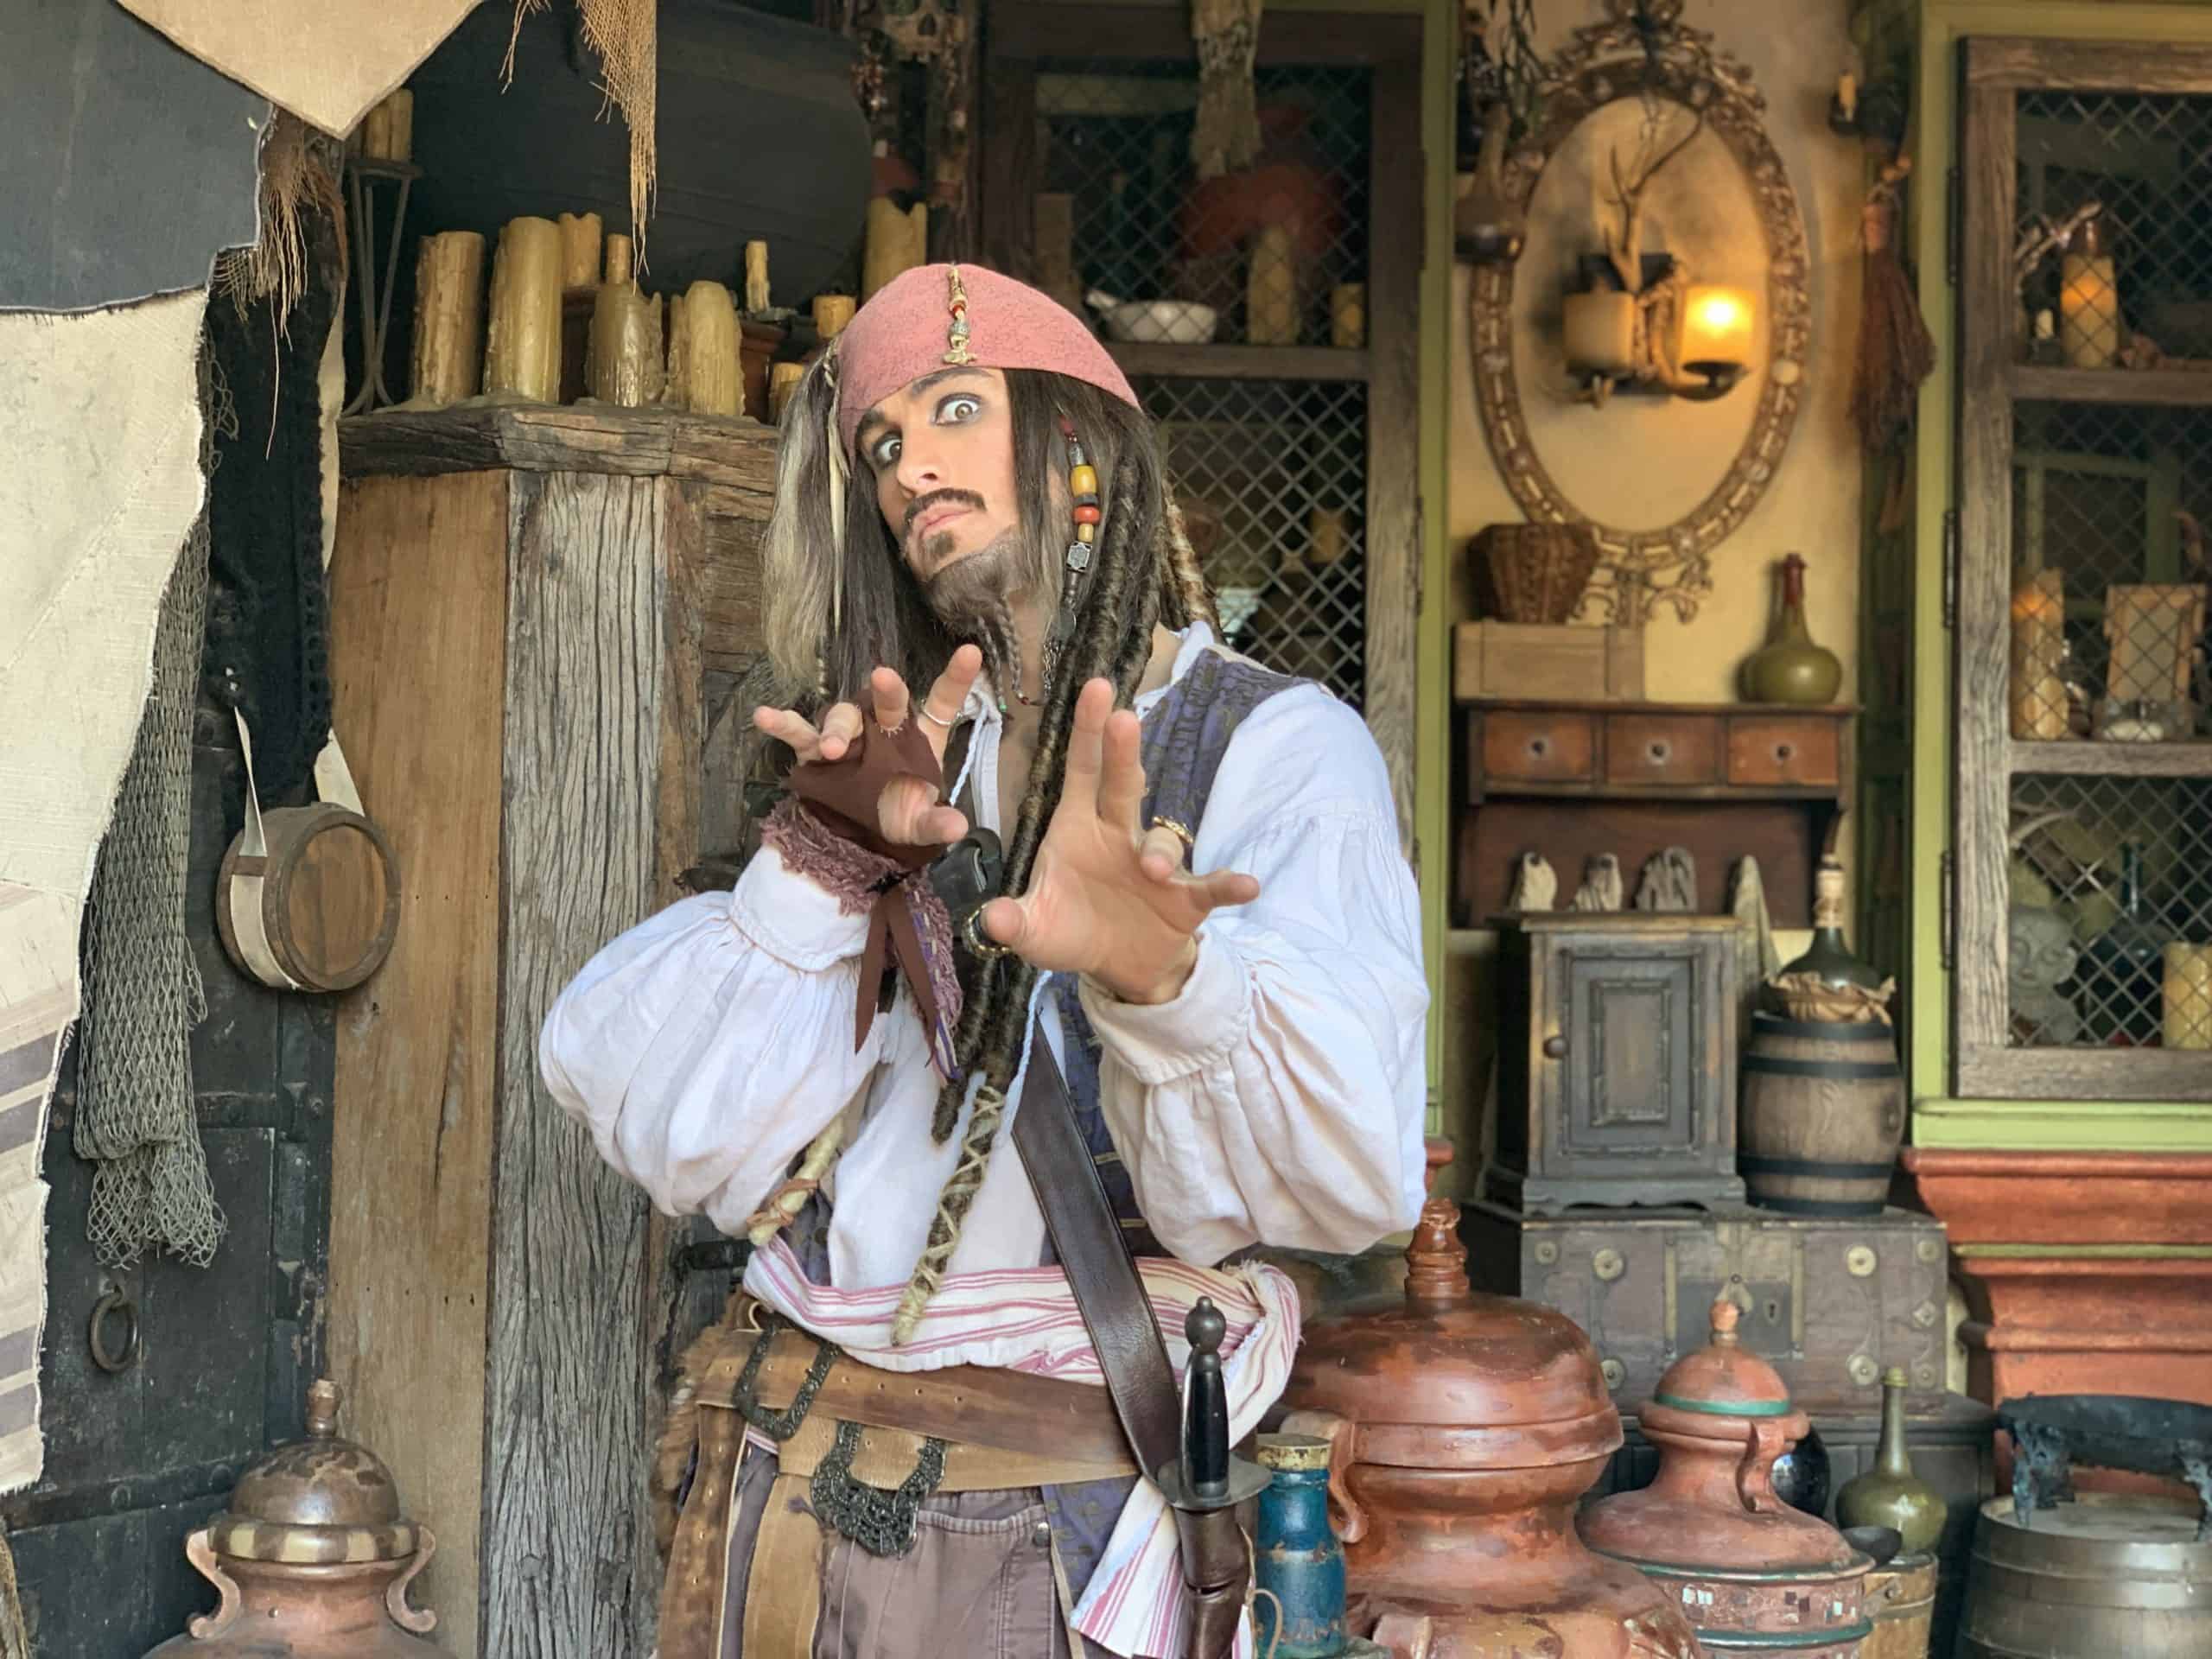 Photopass at Magic Kingdom: Captian Jack Sparrow in Adventureland